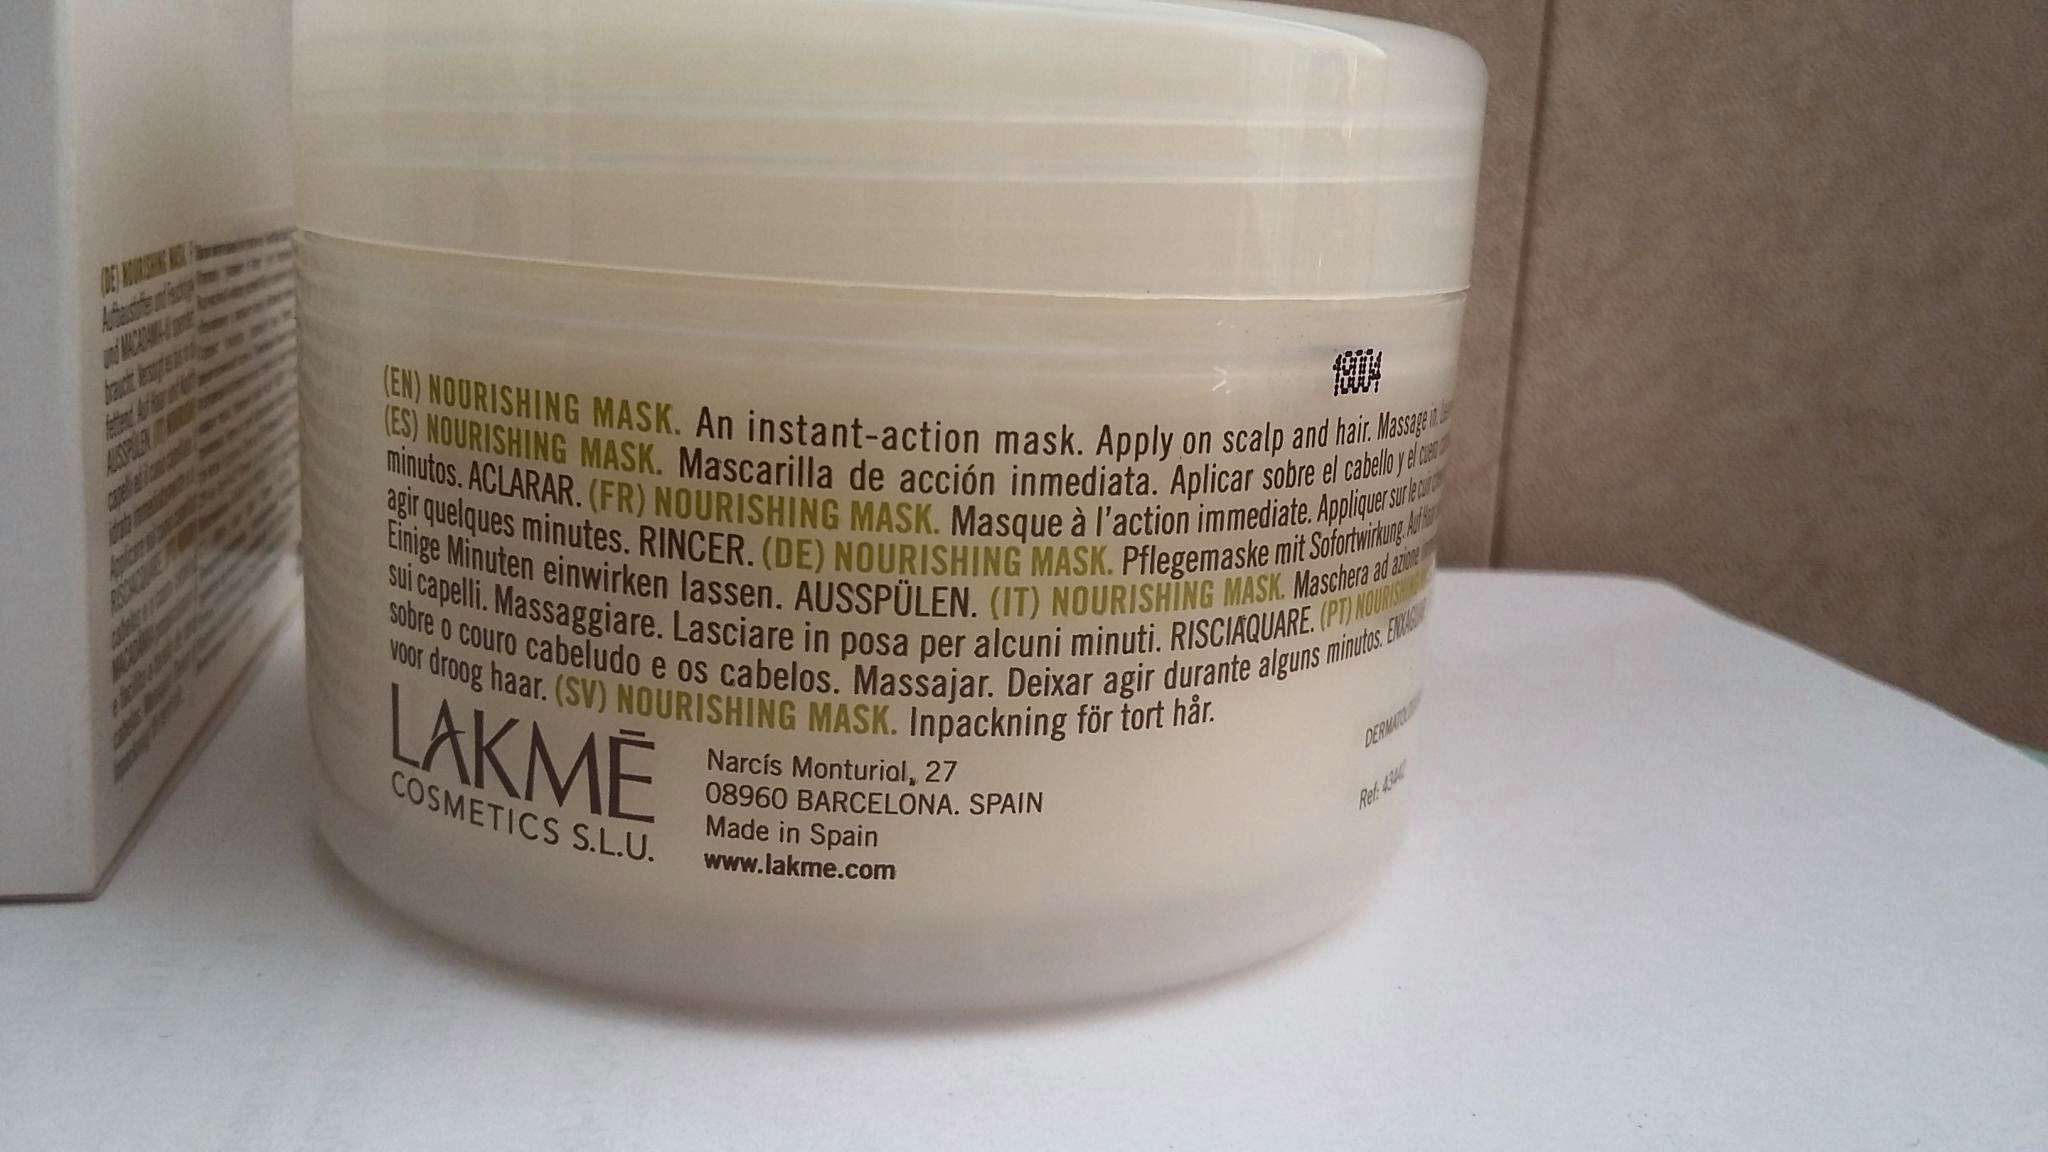 K therapy repair nourishing mask dry hair маска питательная для сухих волос